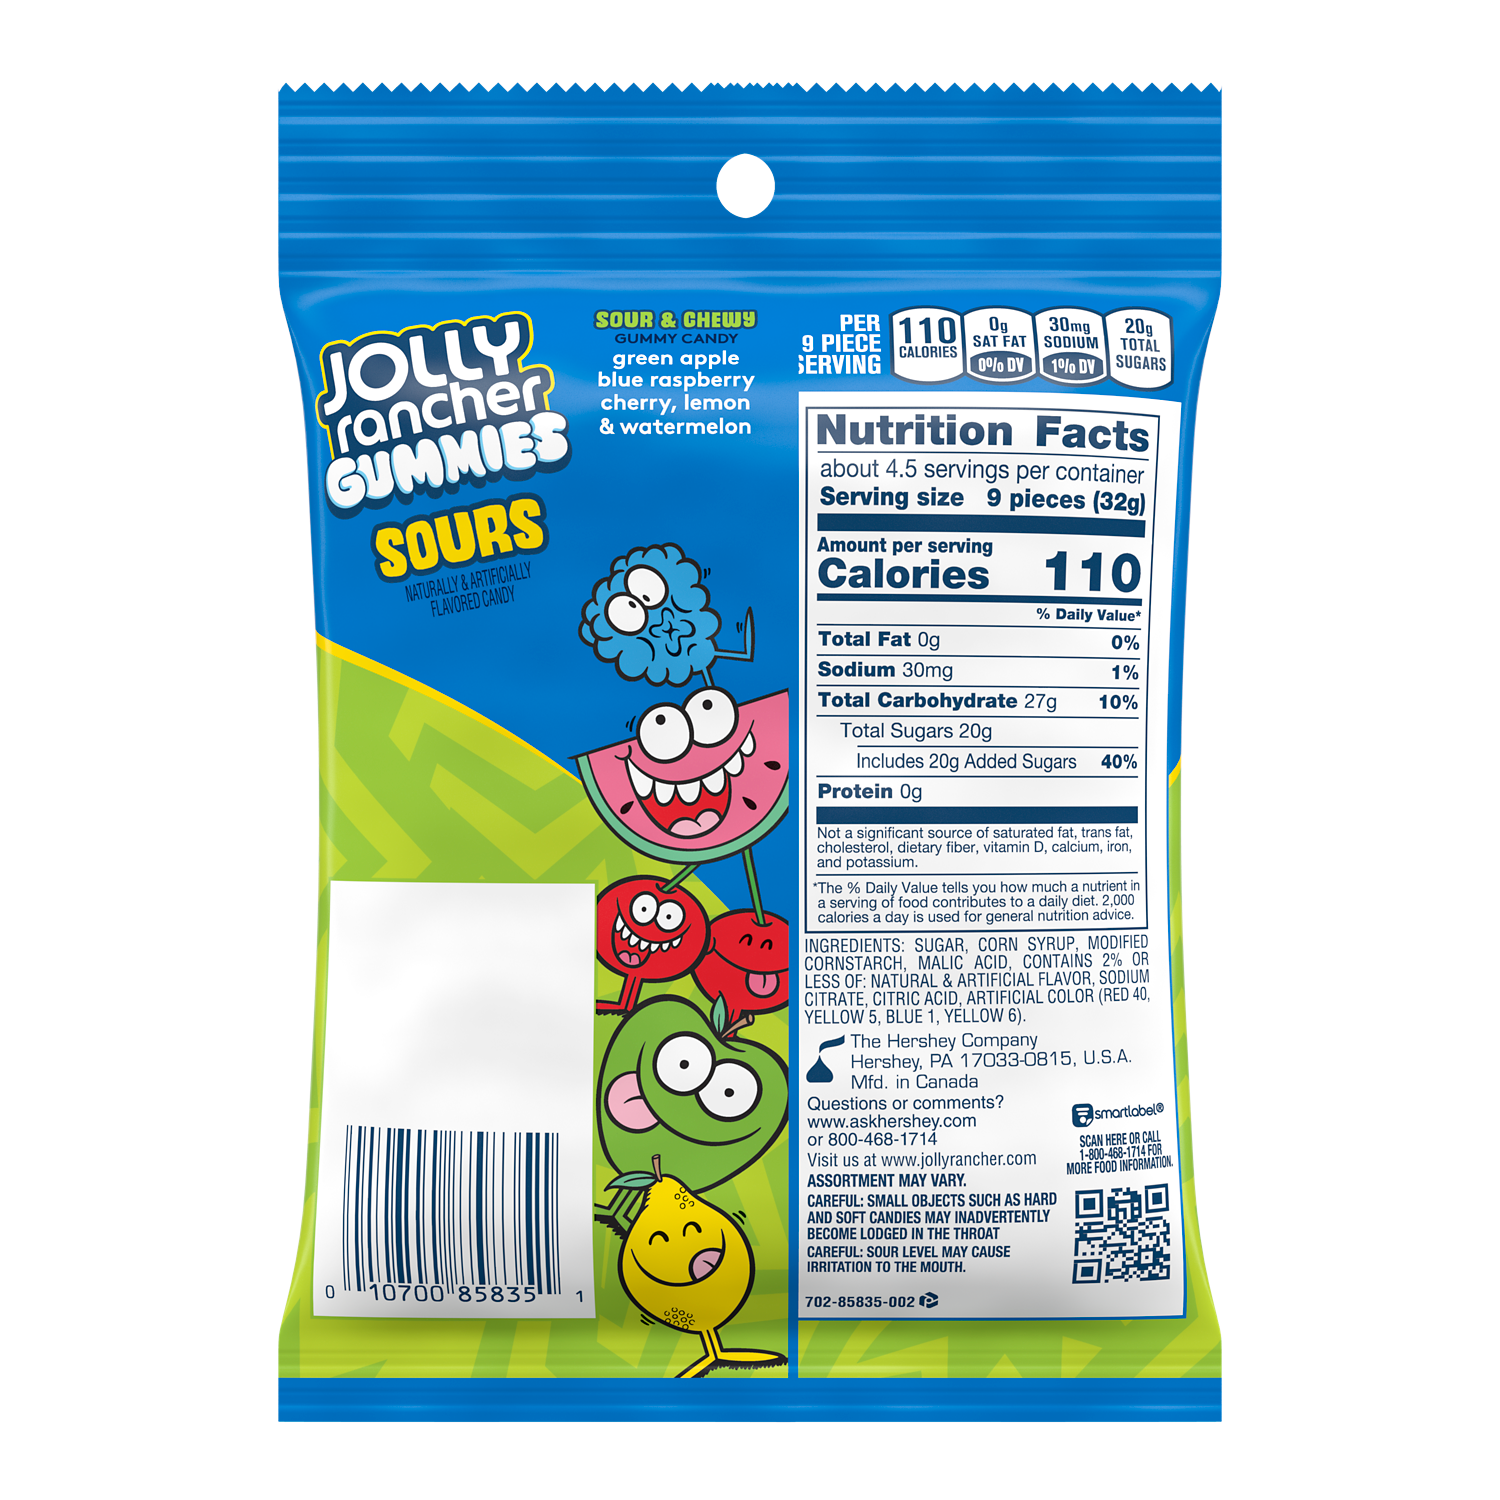 JOLLY RANCHER GUMMIES Green Apple, Blue Raspberry, Cherry, Grape, Watermelon Candy, 5 oz bag - Back of Package